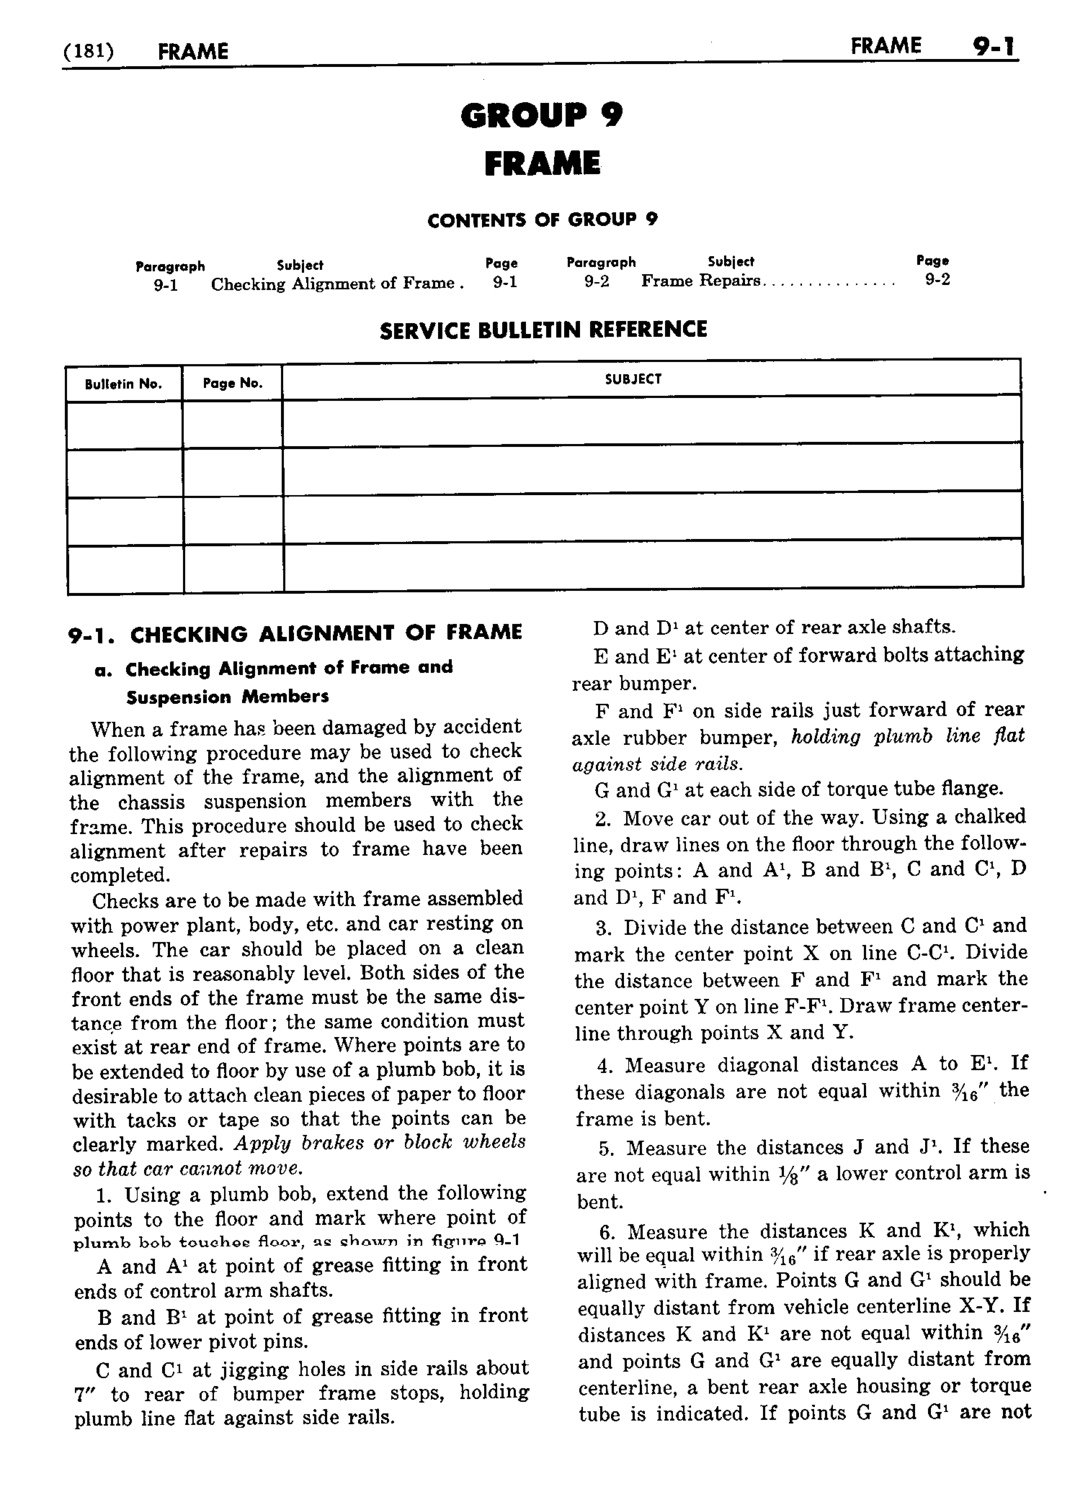 n_10 1953 Buick Shop Manual - Frame-001-001.jpg